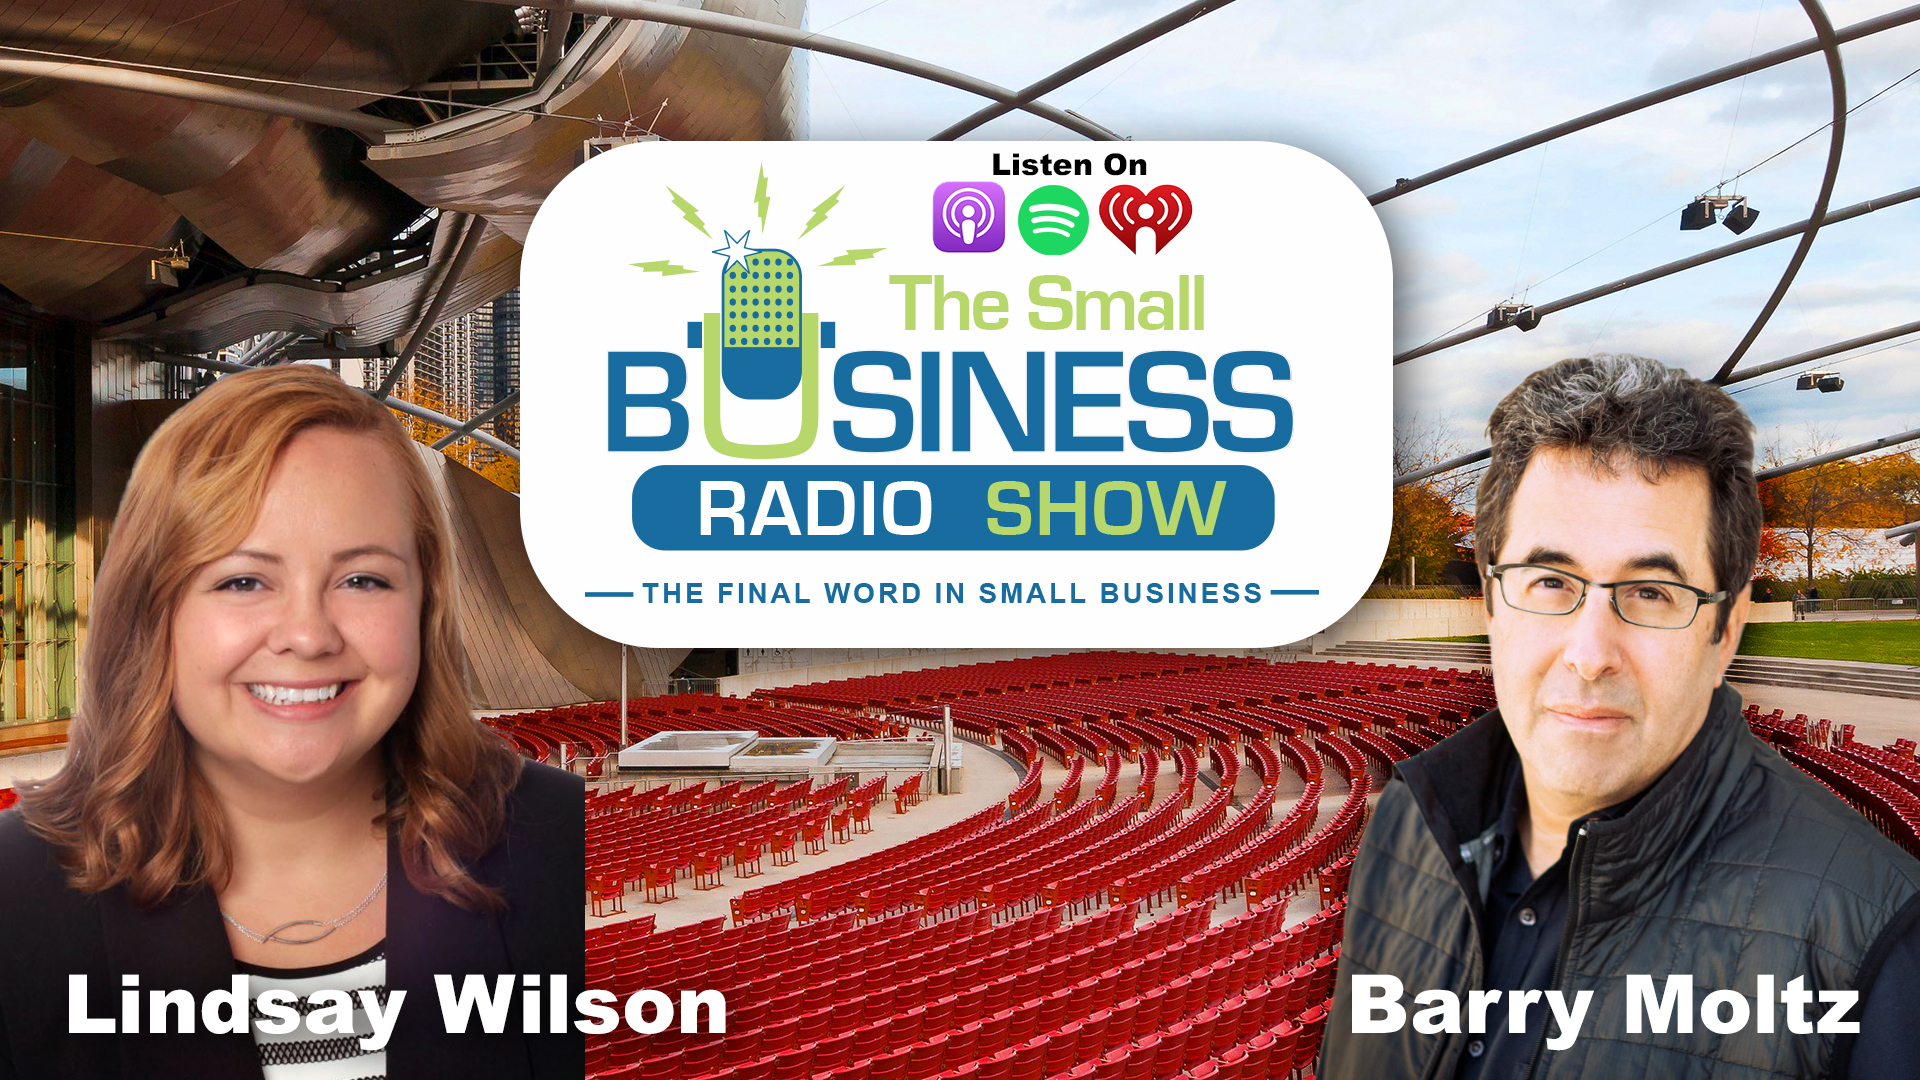 Lindsay Wilson on The Small Business Radio Show